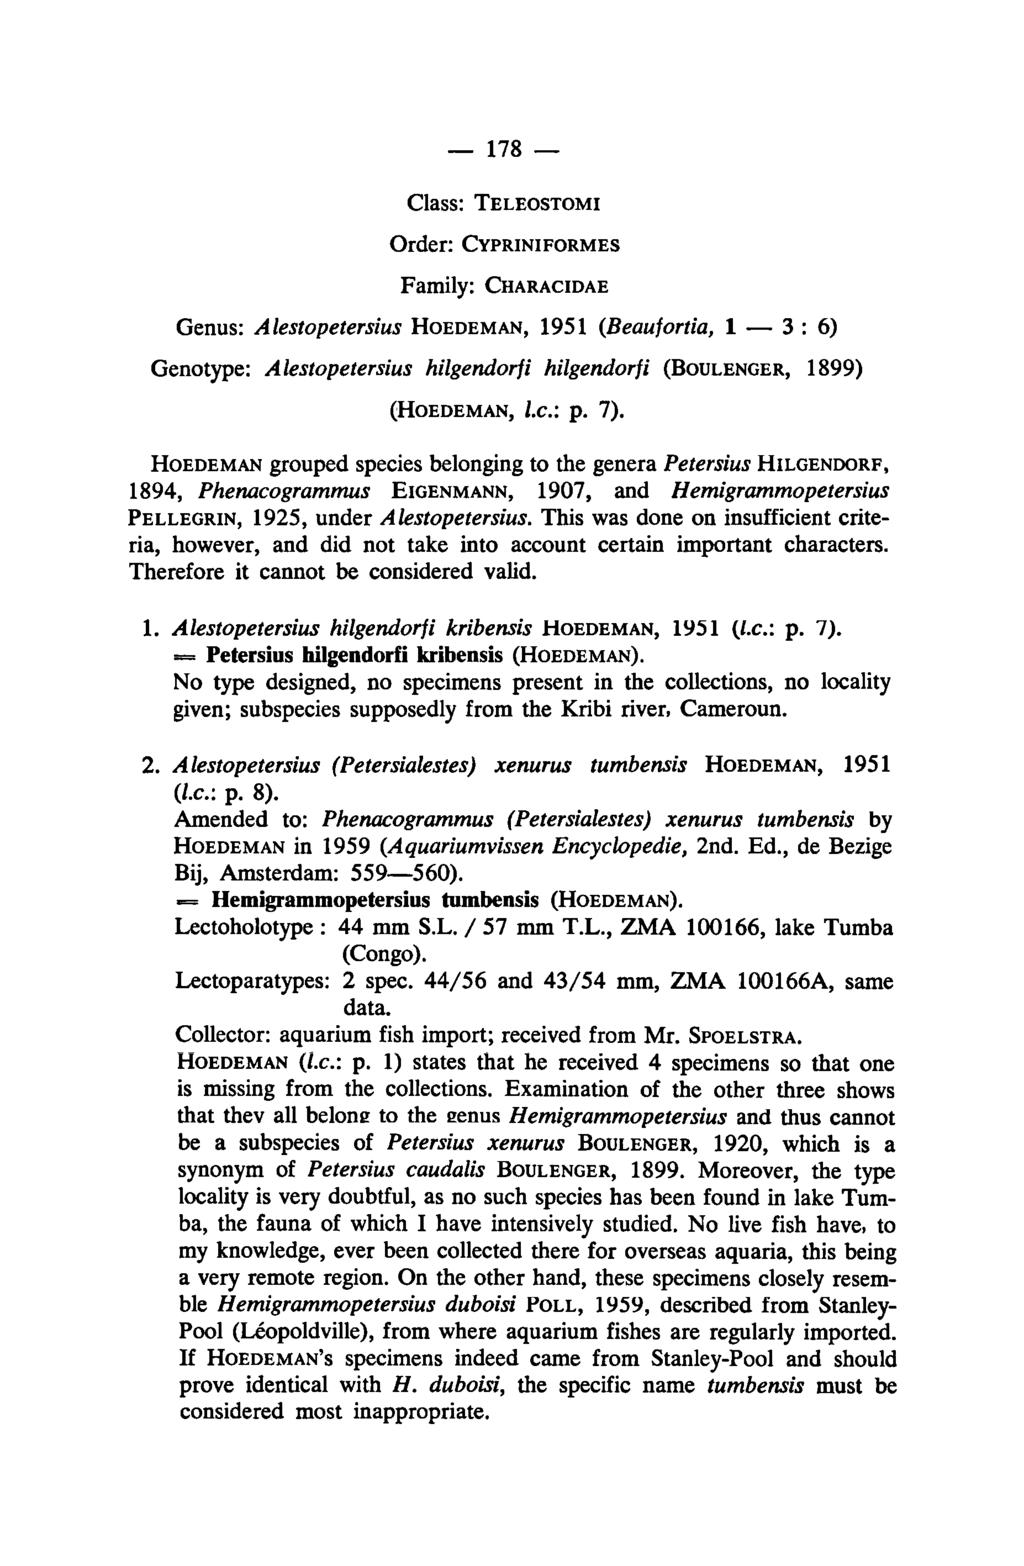 Hemigrammopetersius 178 Class: Teleostomi Order: Cypriniformes Family: Characidae Genus: Alestopetersius Hoedeman, 1951 (Beaufortia, 1 3:6) Genotype: Alestopetersius hilgendorfi hilgendorfi